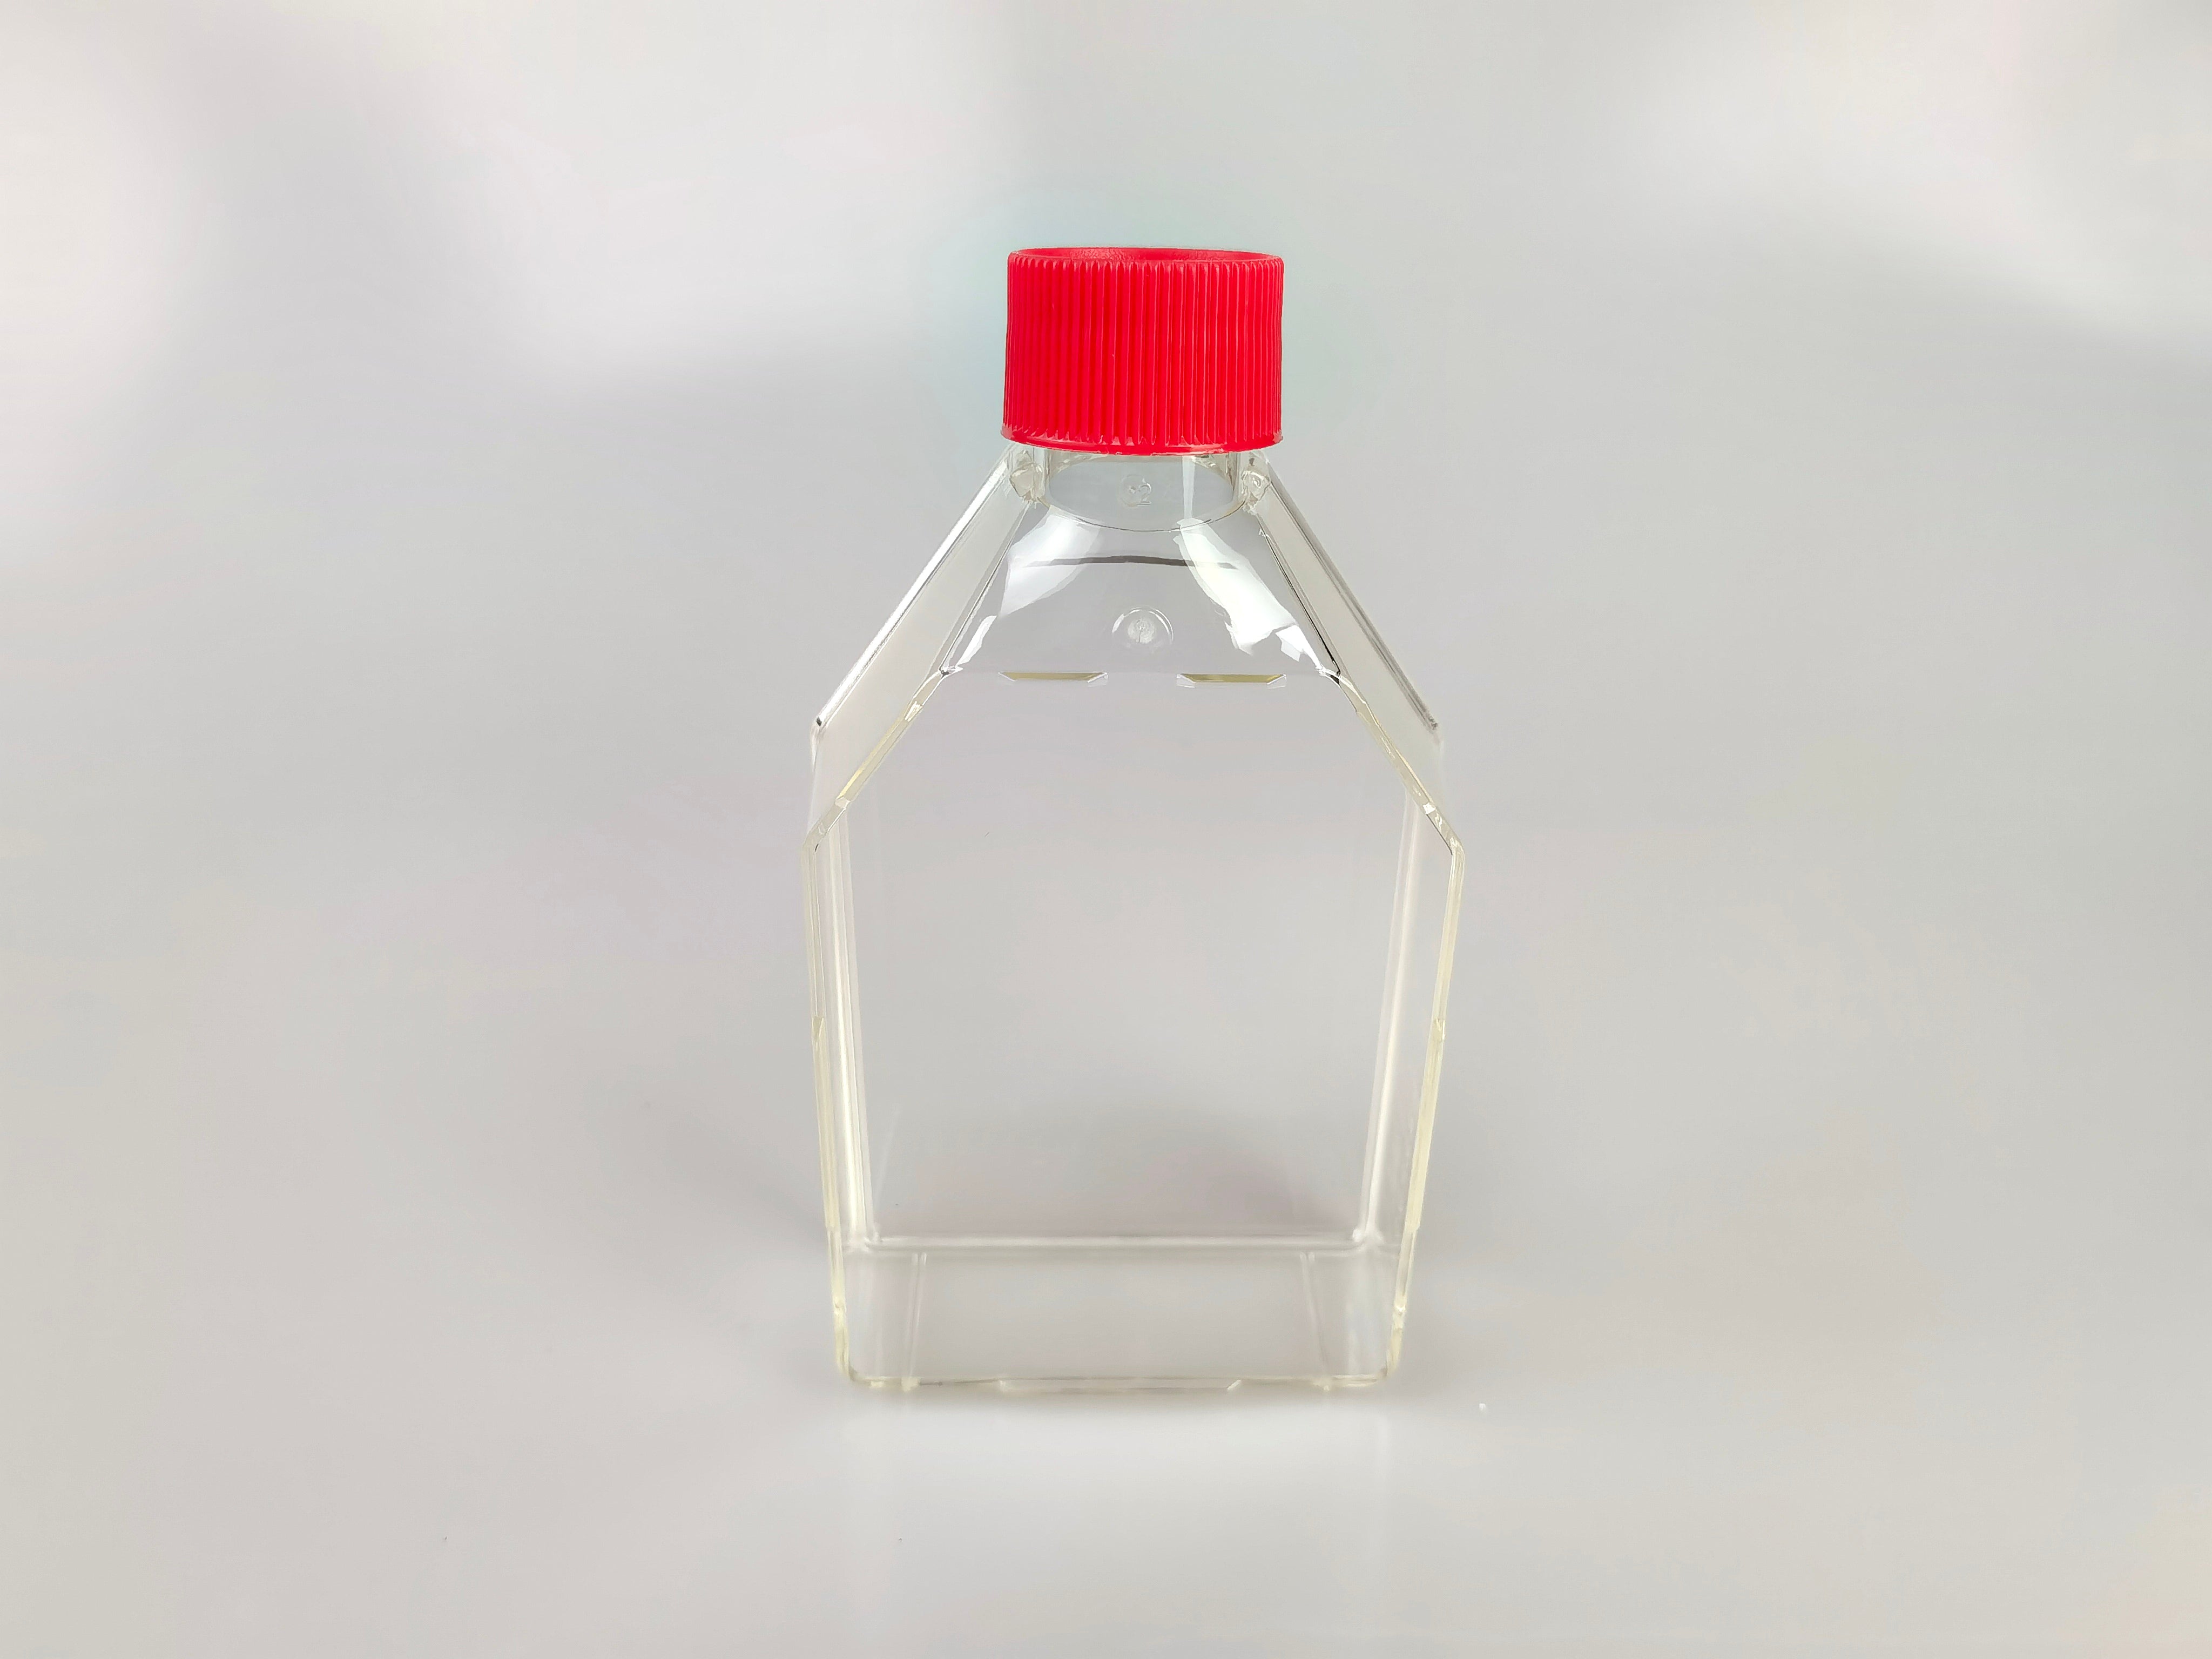 75cm² Cell Culture Flask, Vent Cap, TC treated